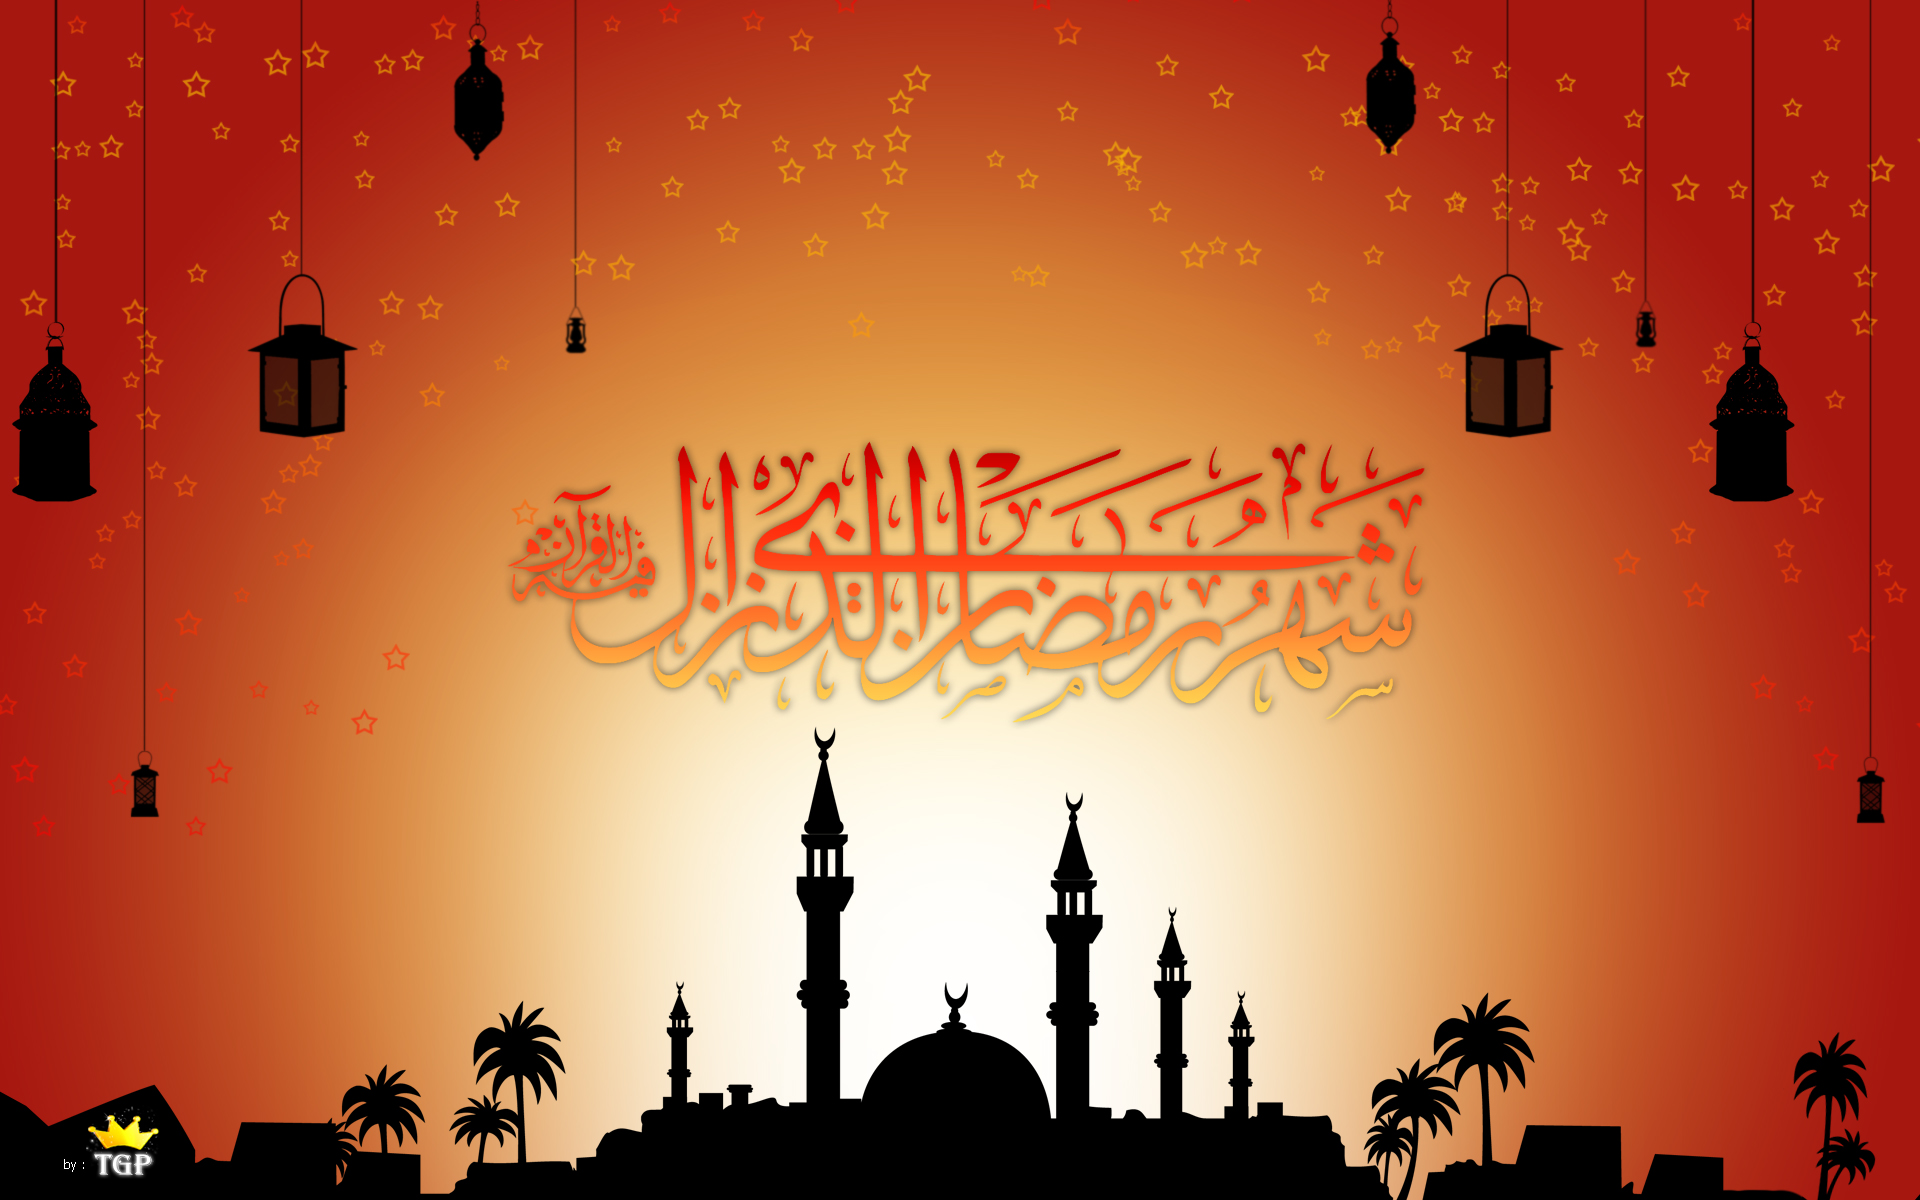 papel tapiz de ramadán de alta calidad,rojo,silueta,naranja,cielo,ilustración